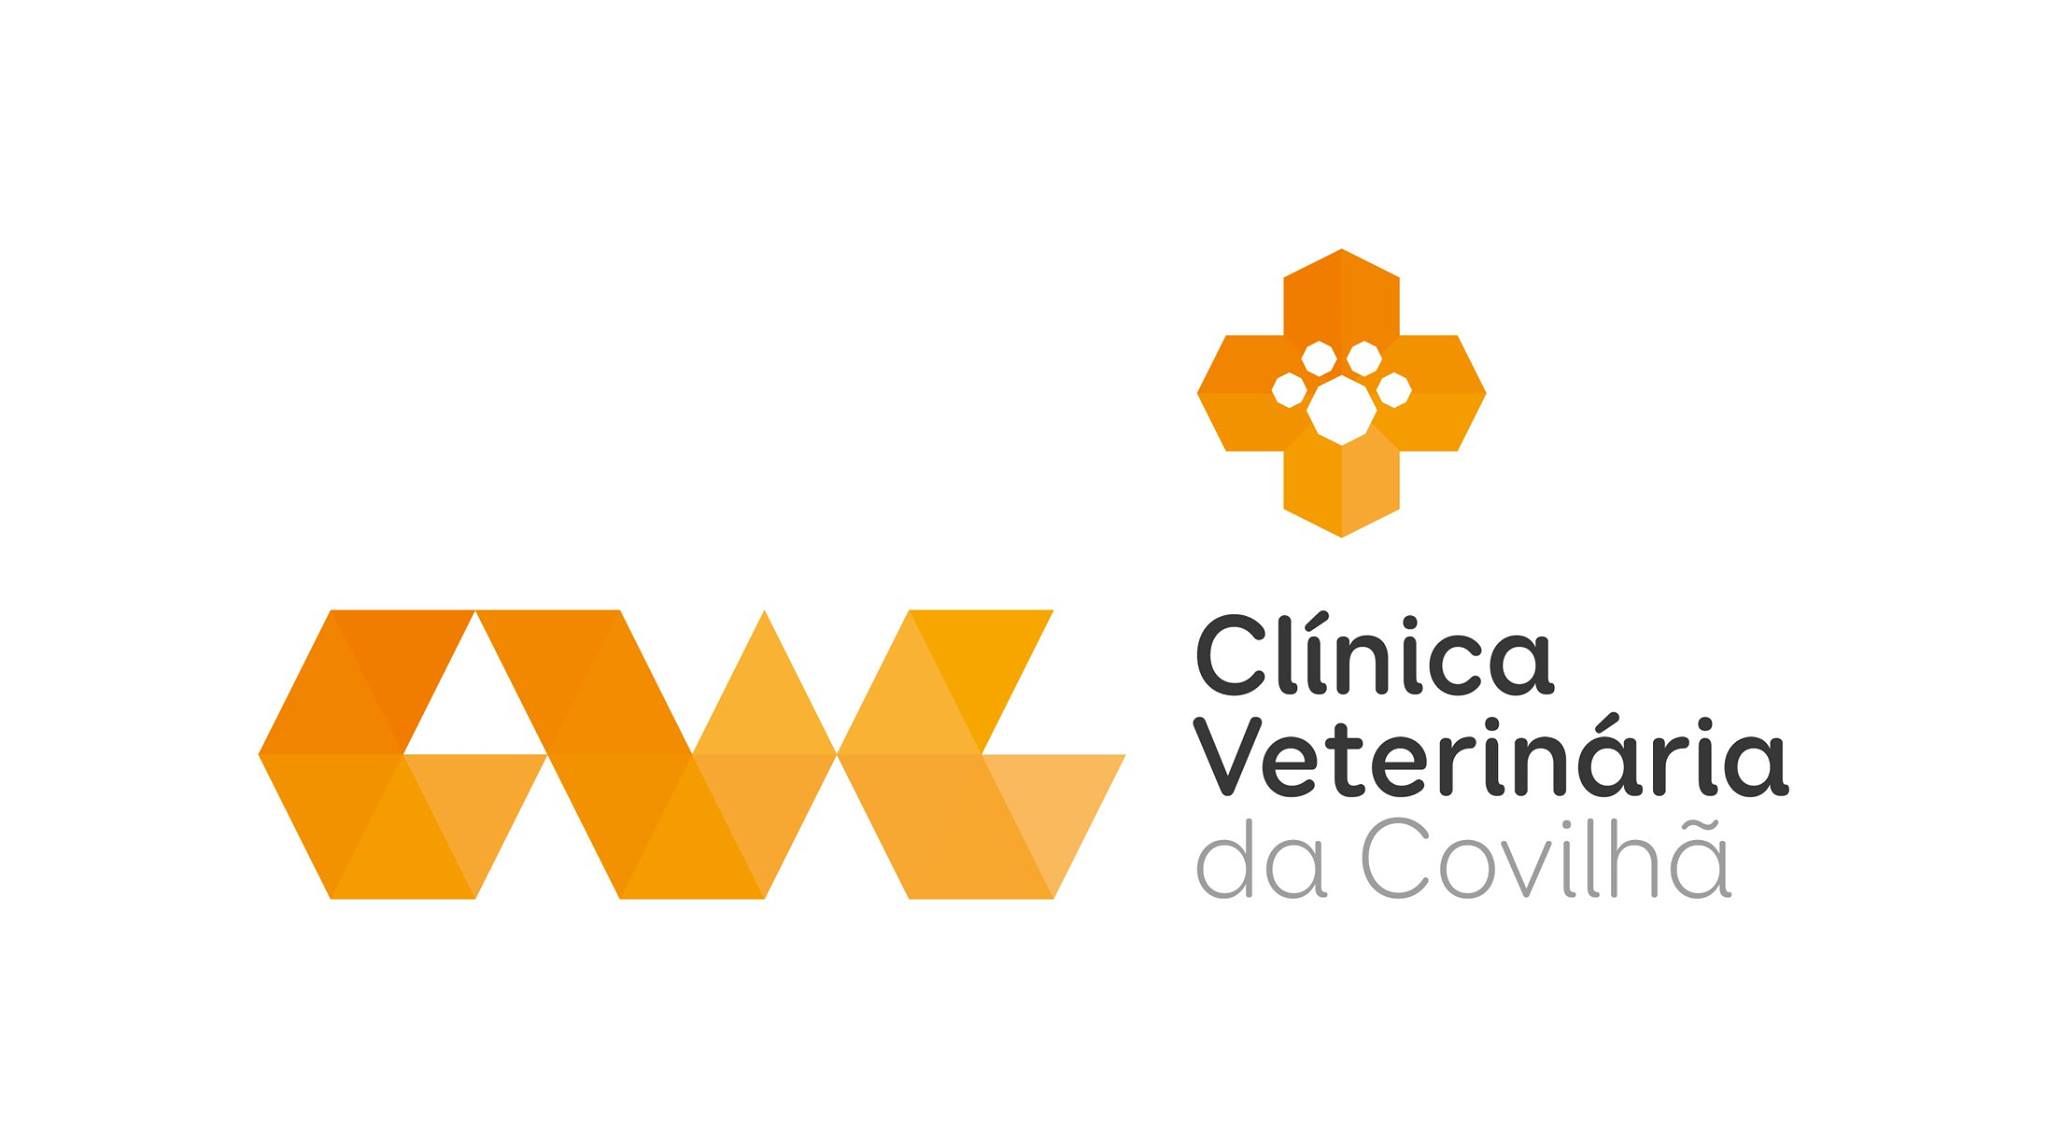 C. Veterinária da Covilhã